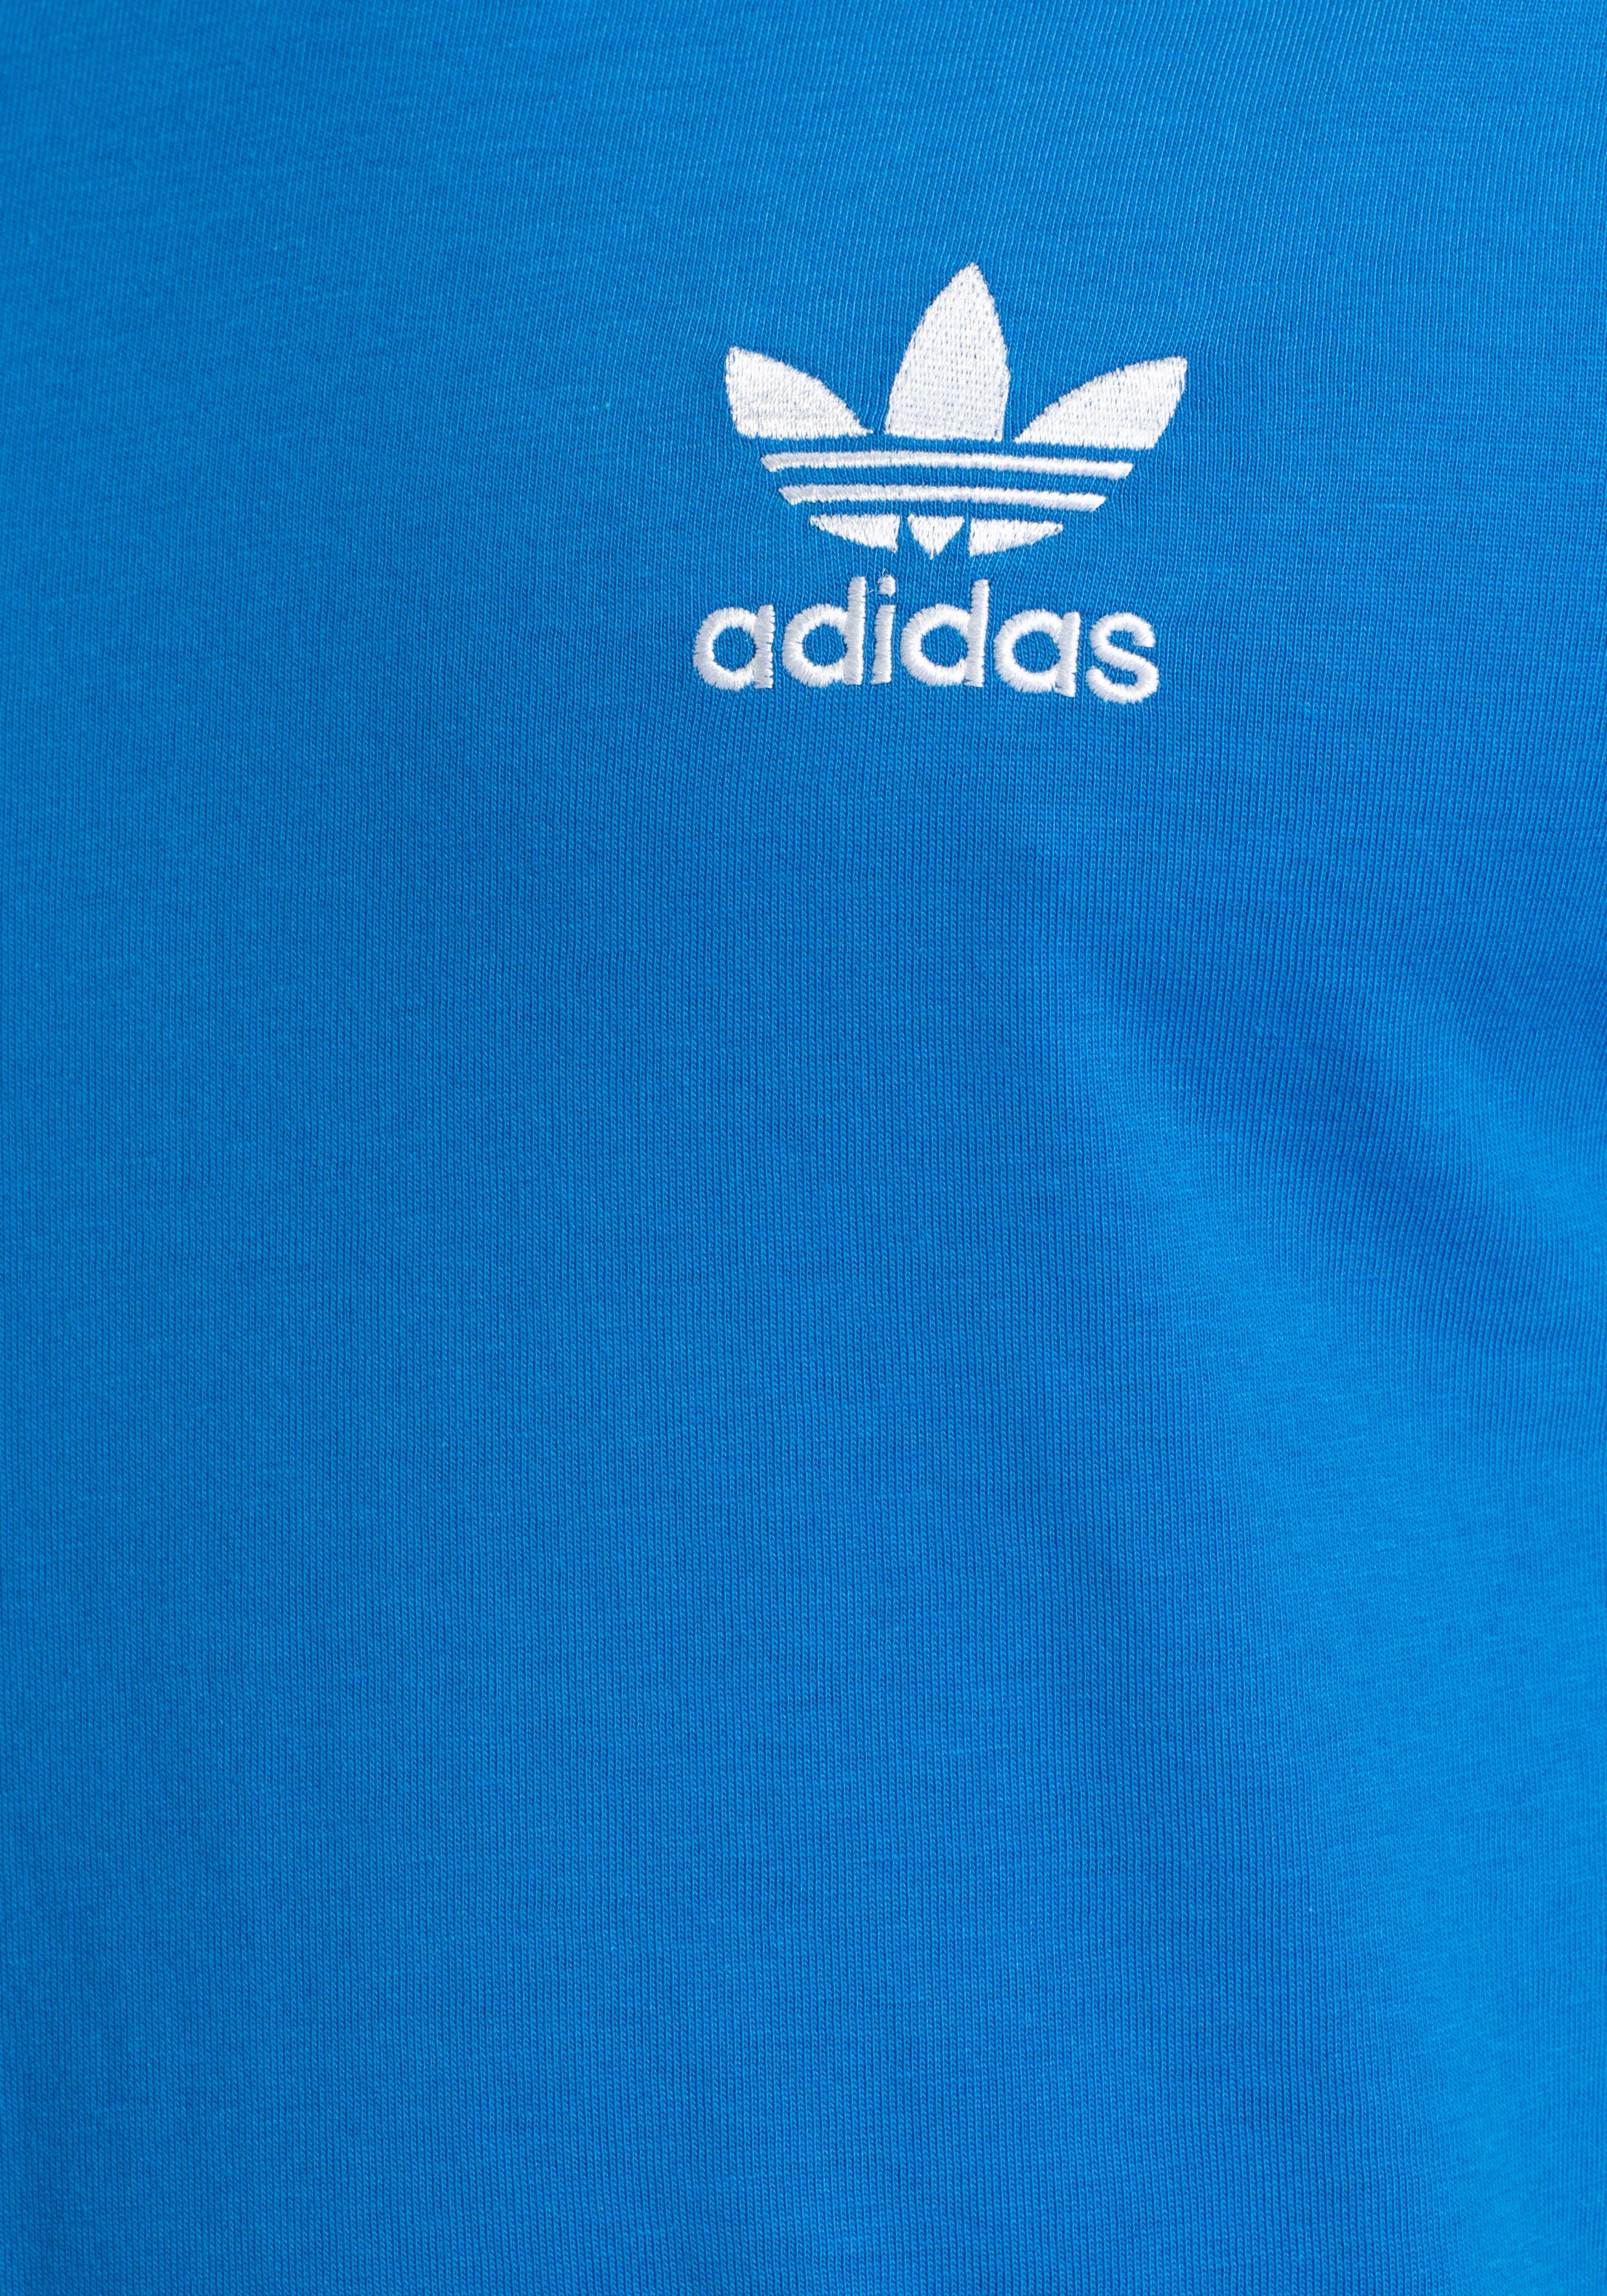 adidas Originals Bluebird T-Shirt 3-STRIPES TEE